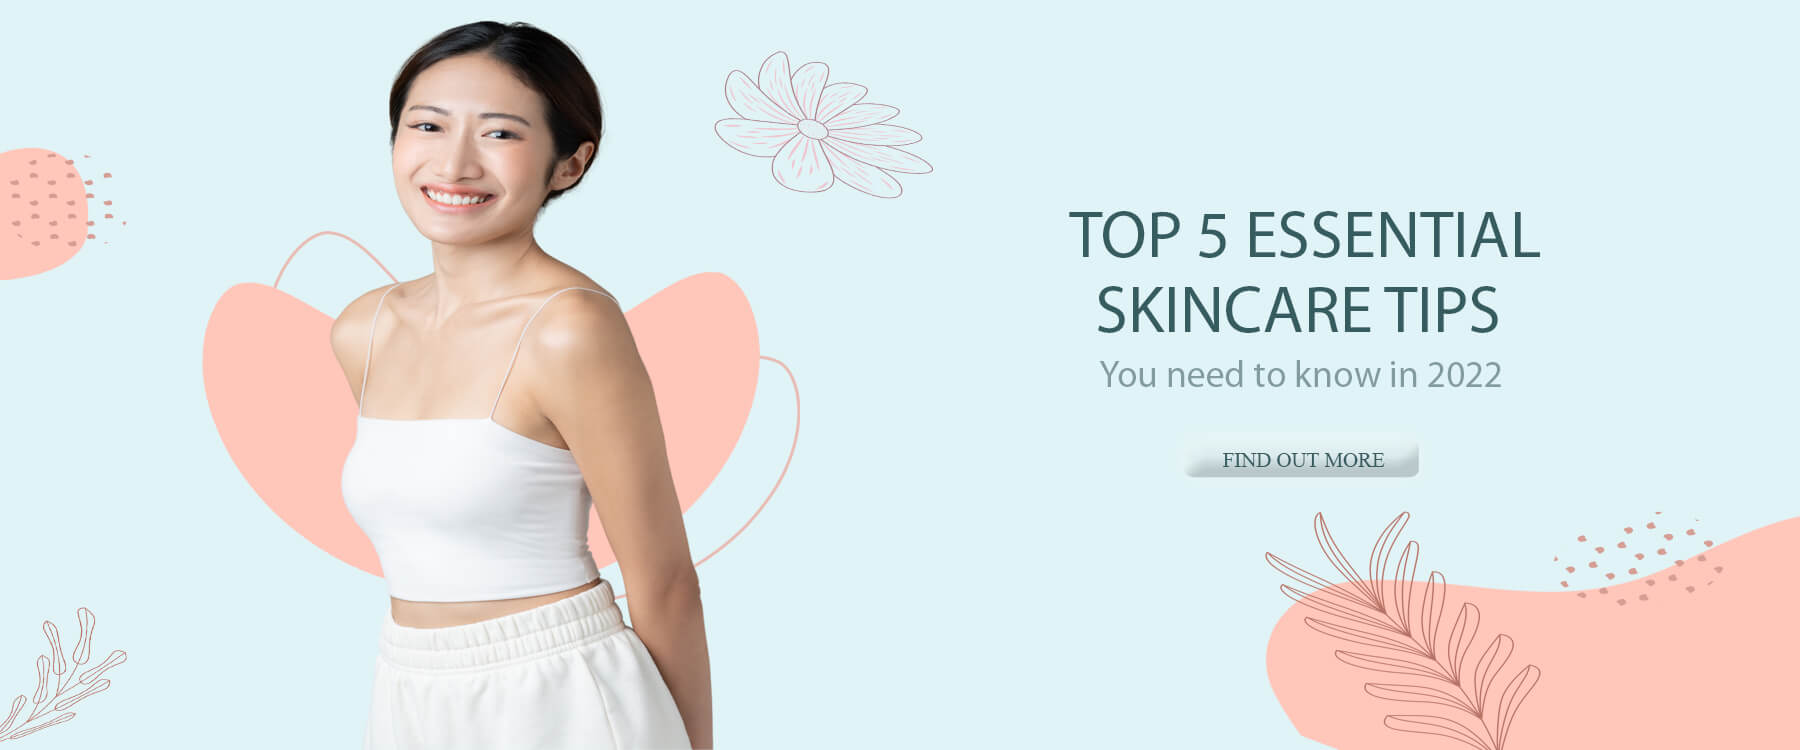 Top 5 Essential Skincare Tips